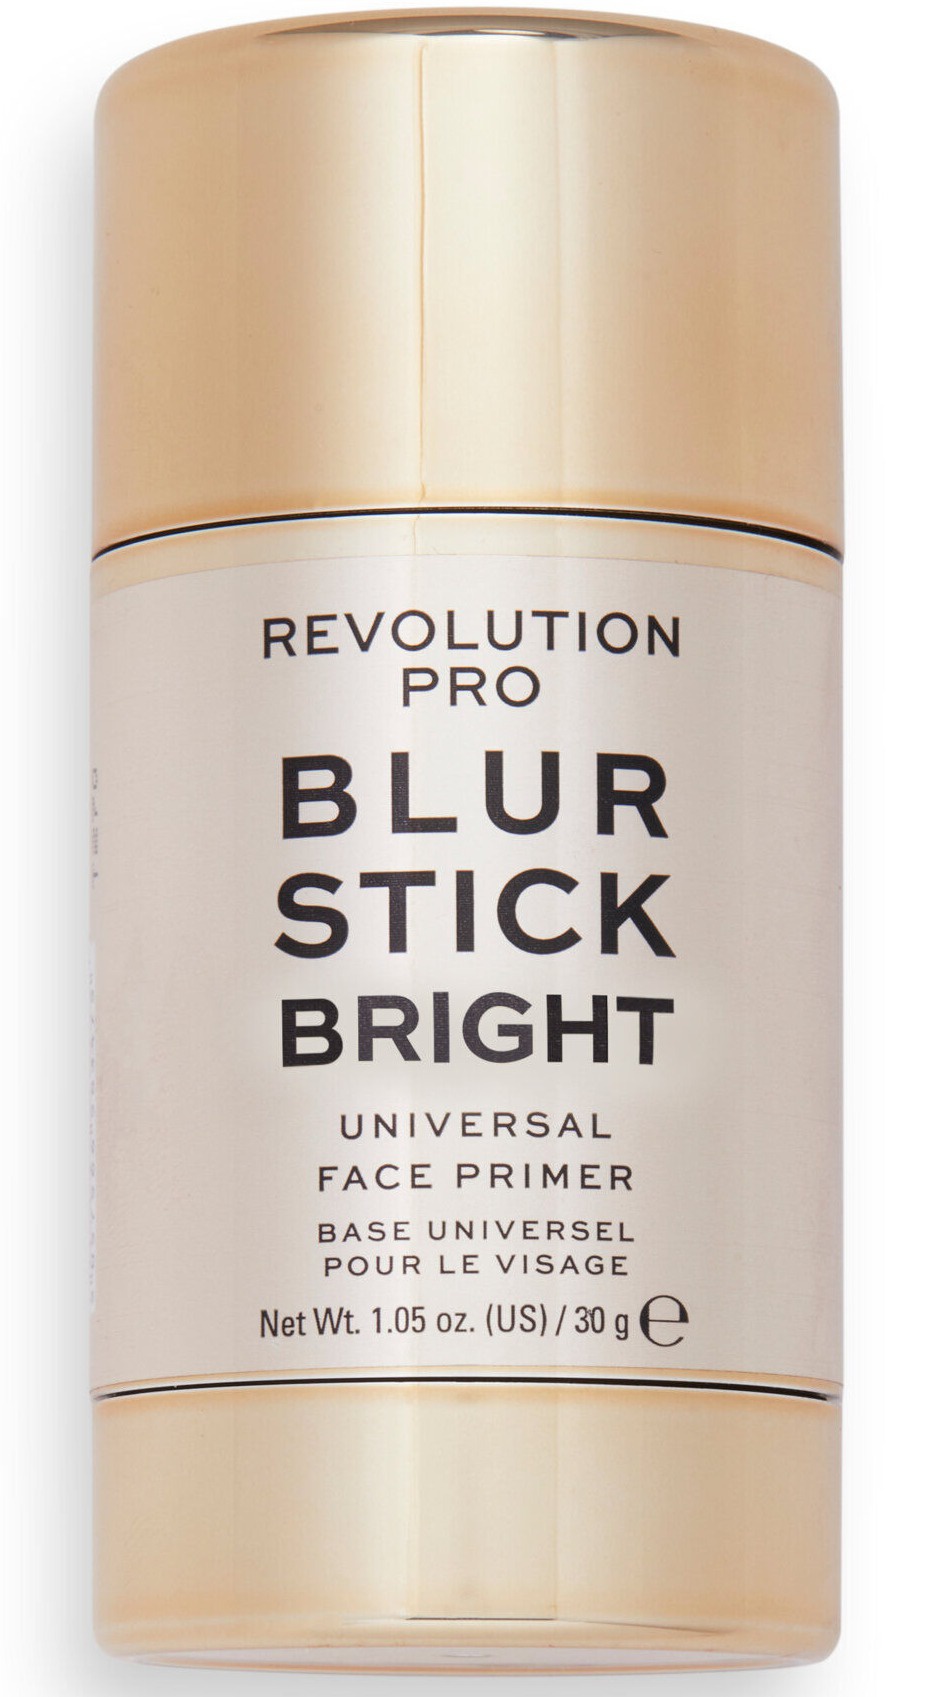 Revolution Pro Blur Stick Bright